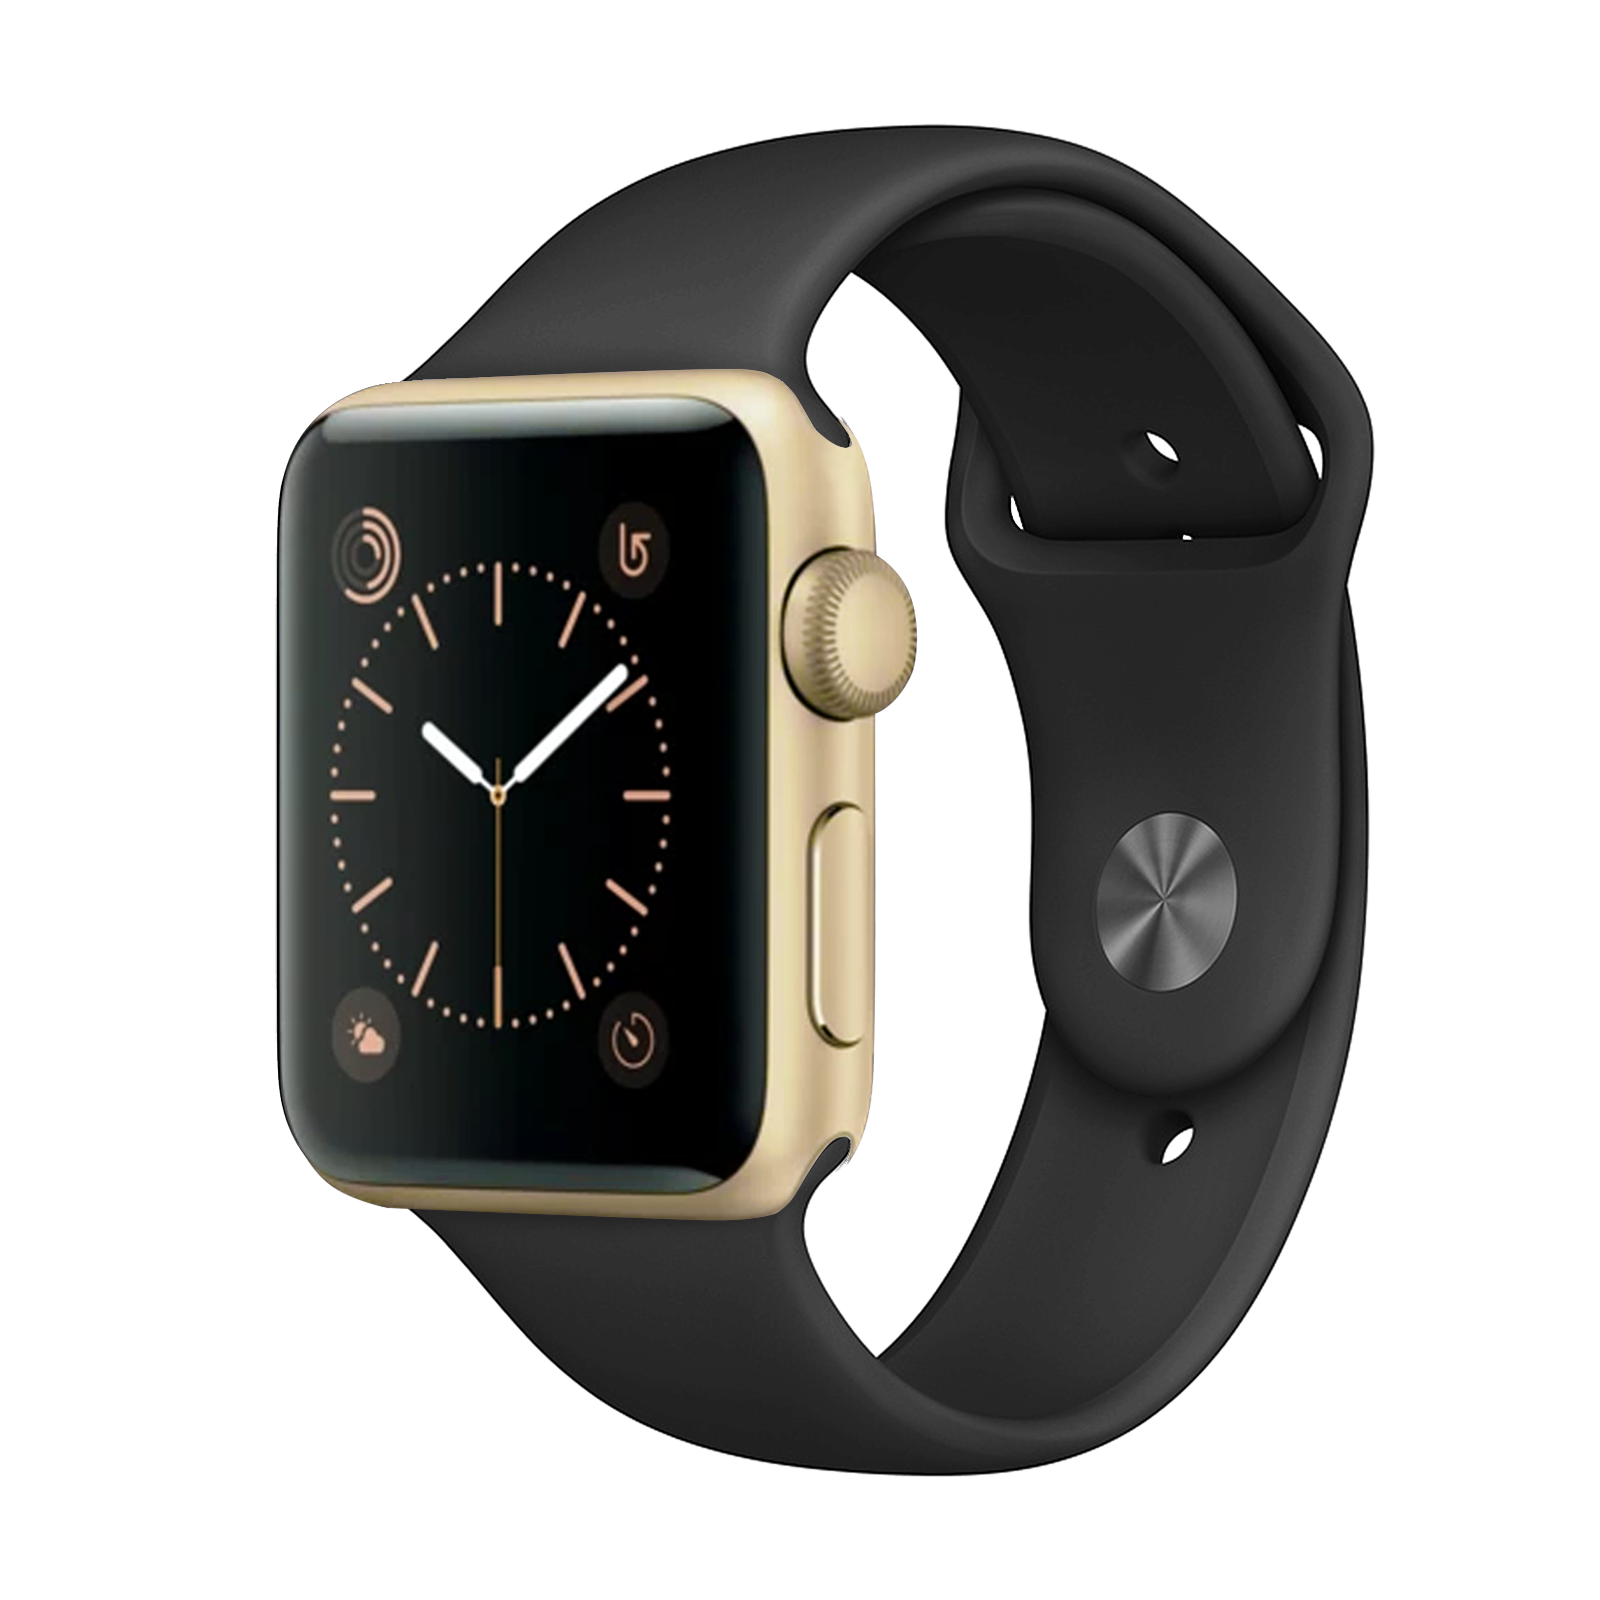 Apple Watch Series 2 Aluminum 38mm Gold Pristine - WiFi